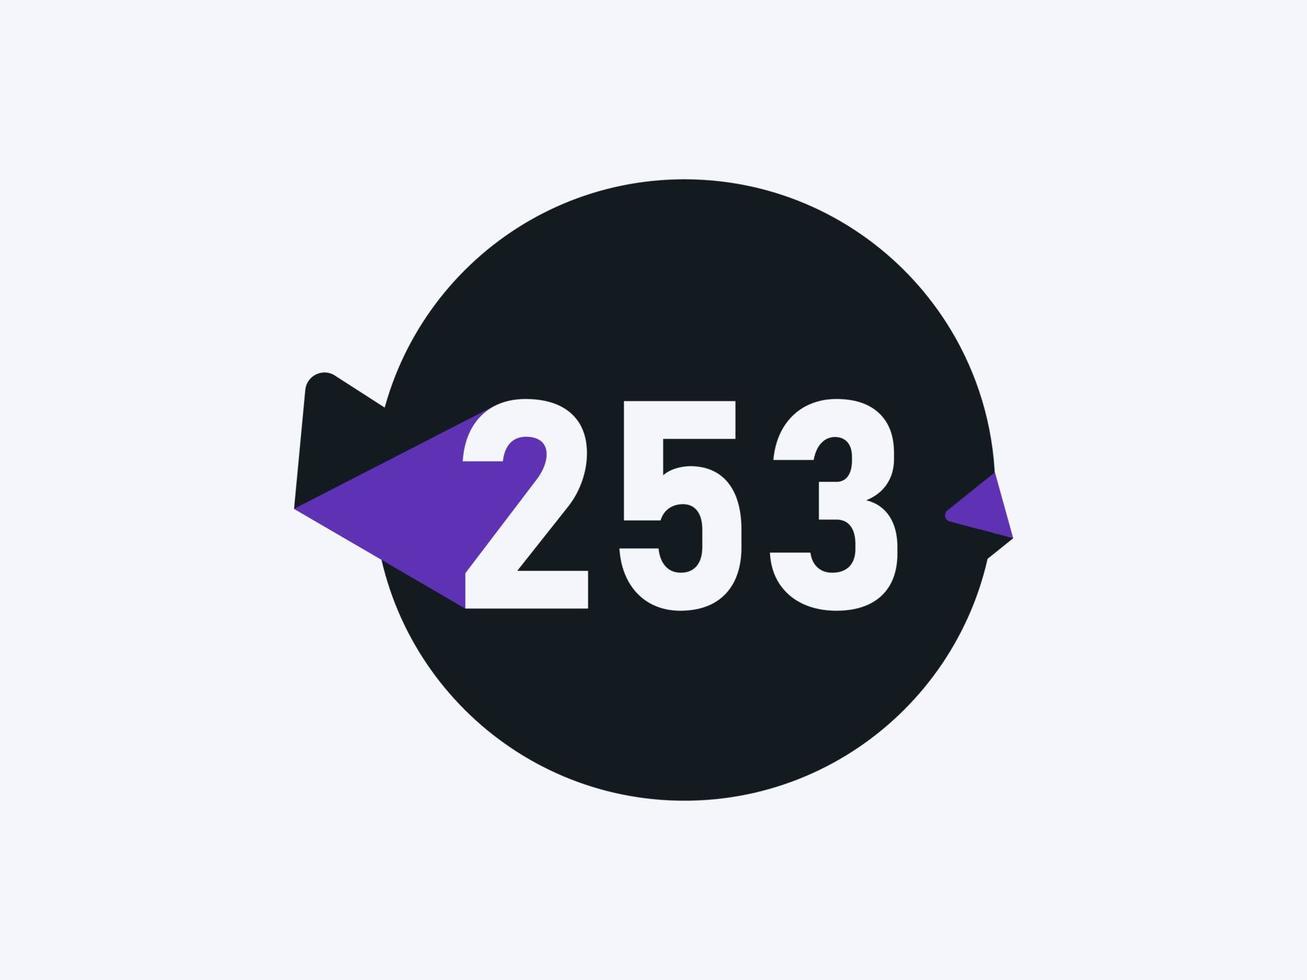 253 Number logo icon design vector image. Number logo icon design vector image